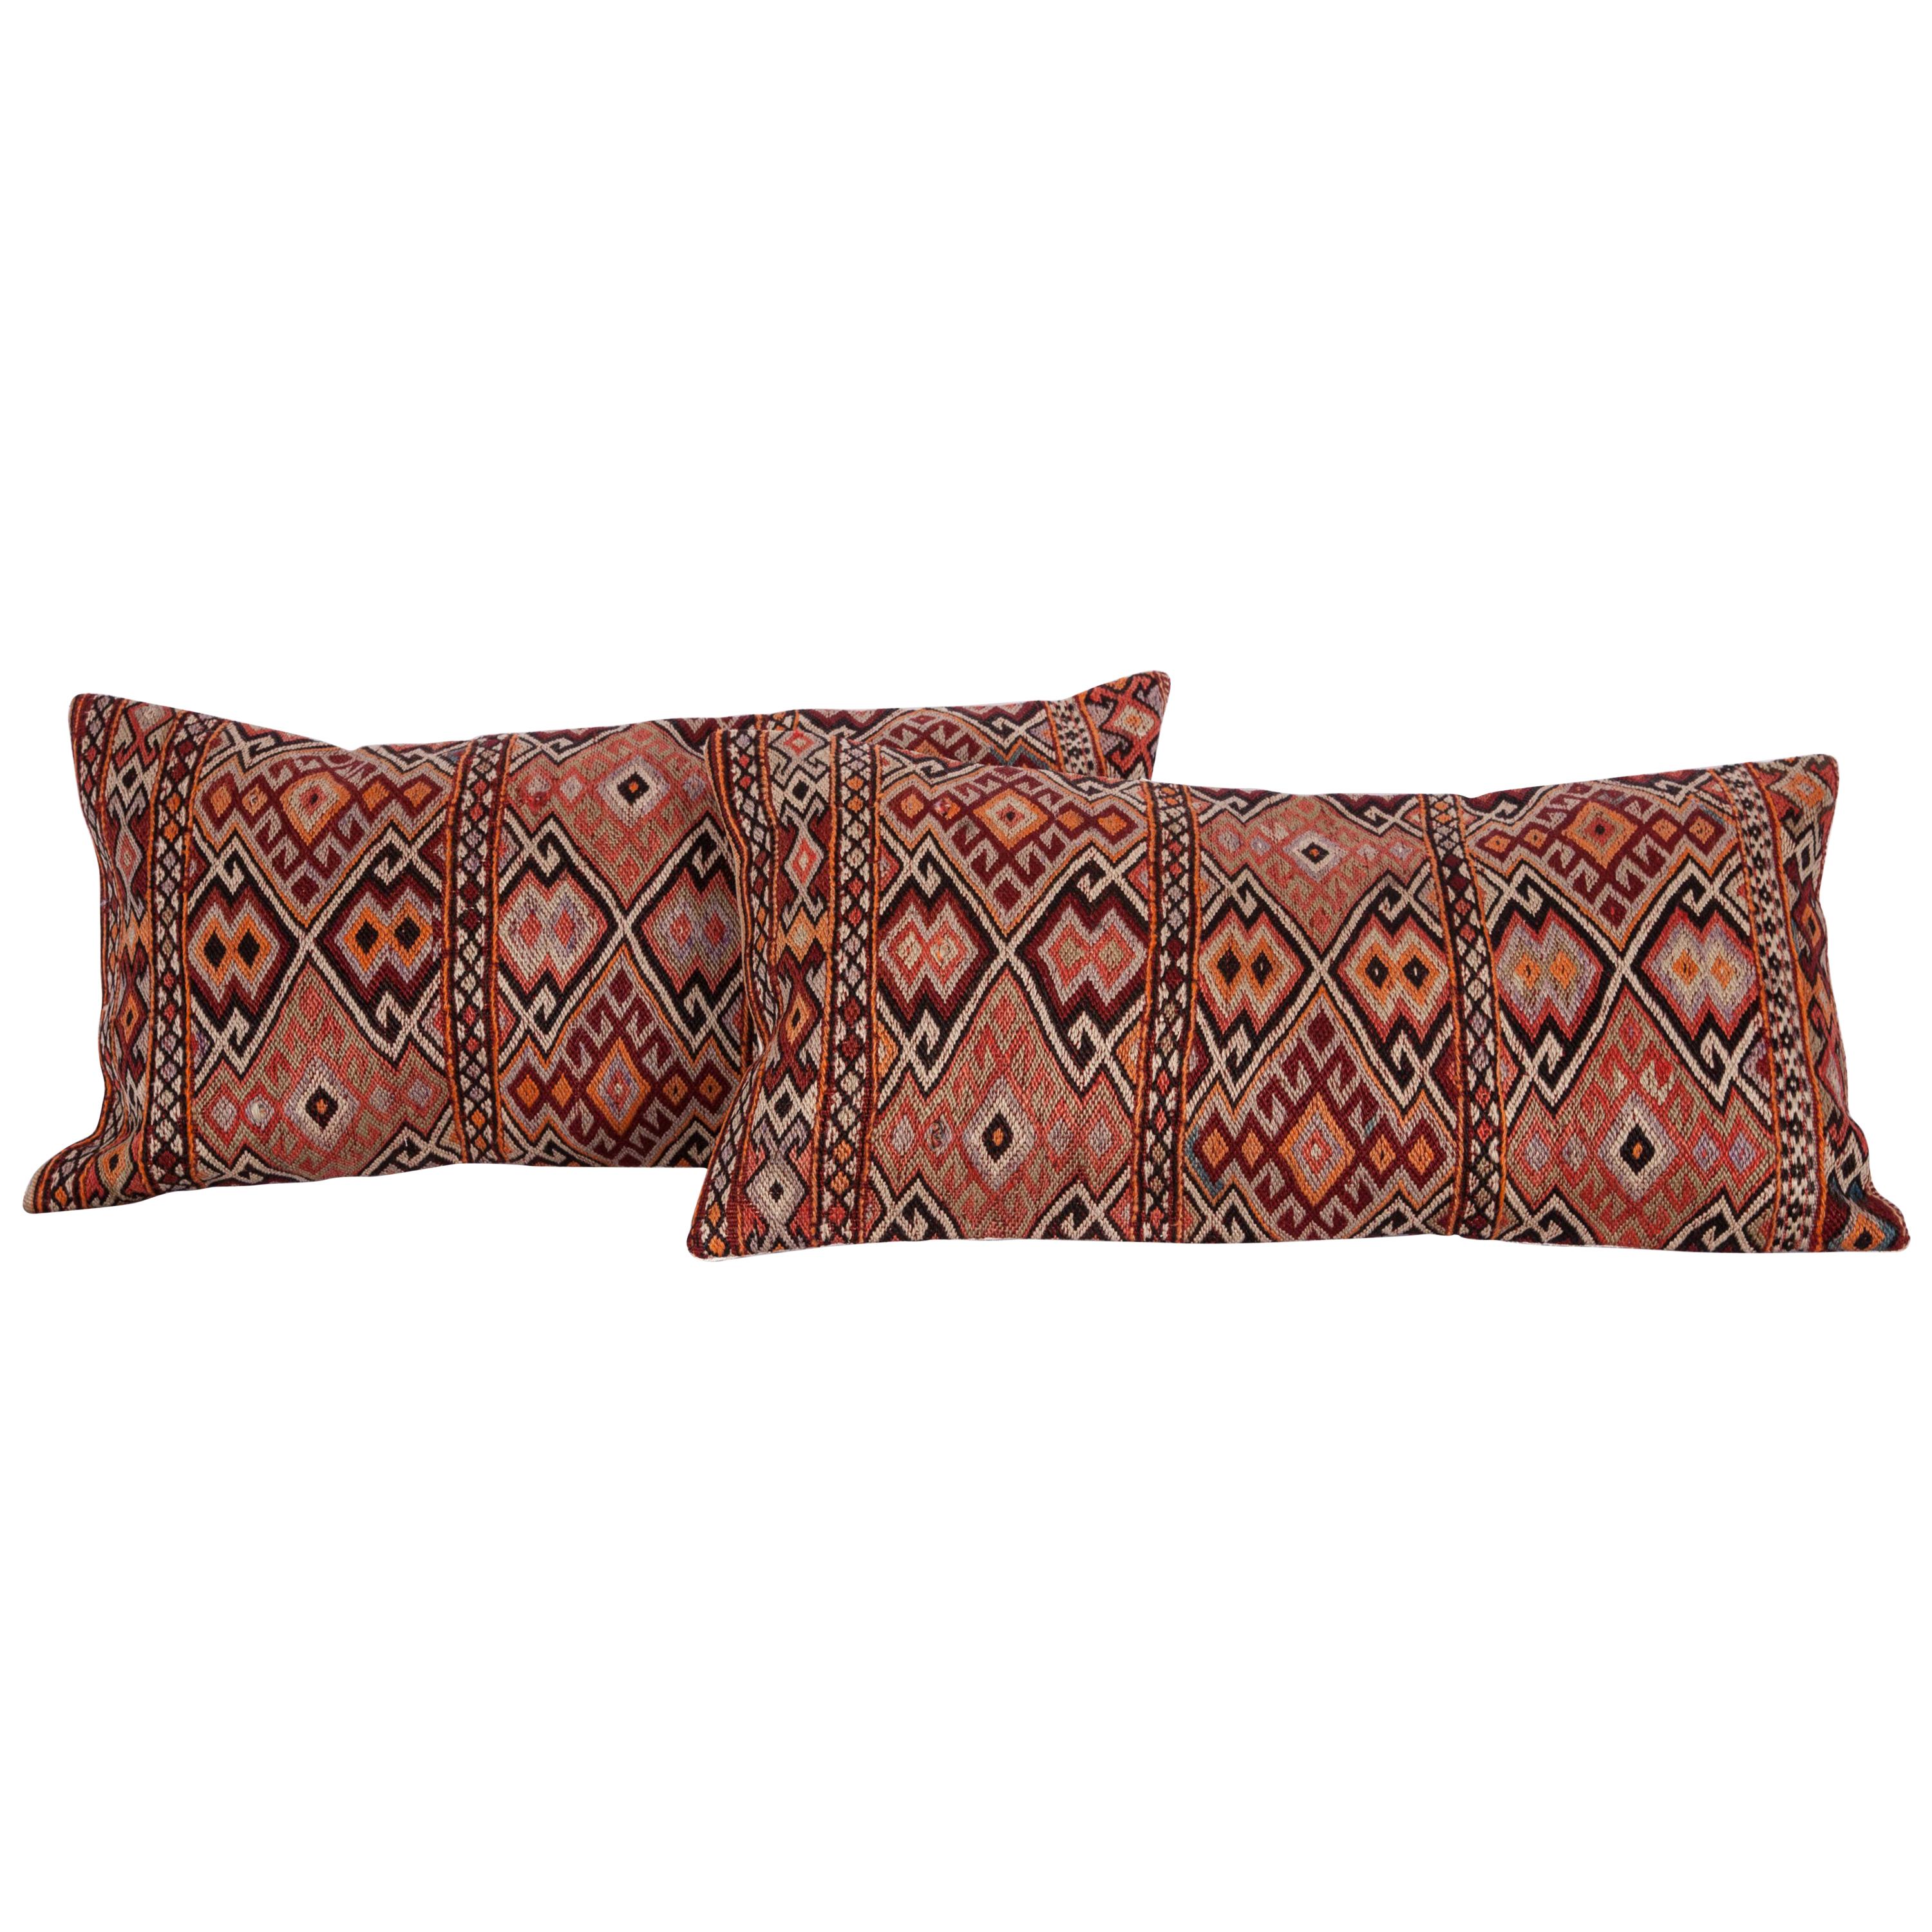 Old Anatolian Sumak Pillow Cases, Early 20th Century